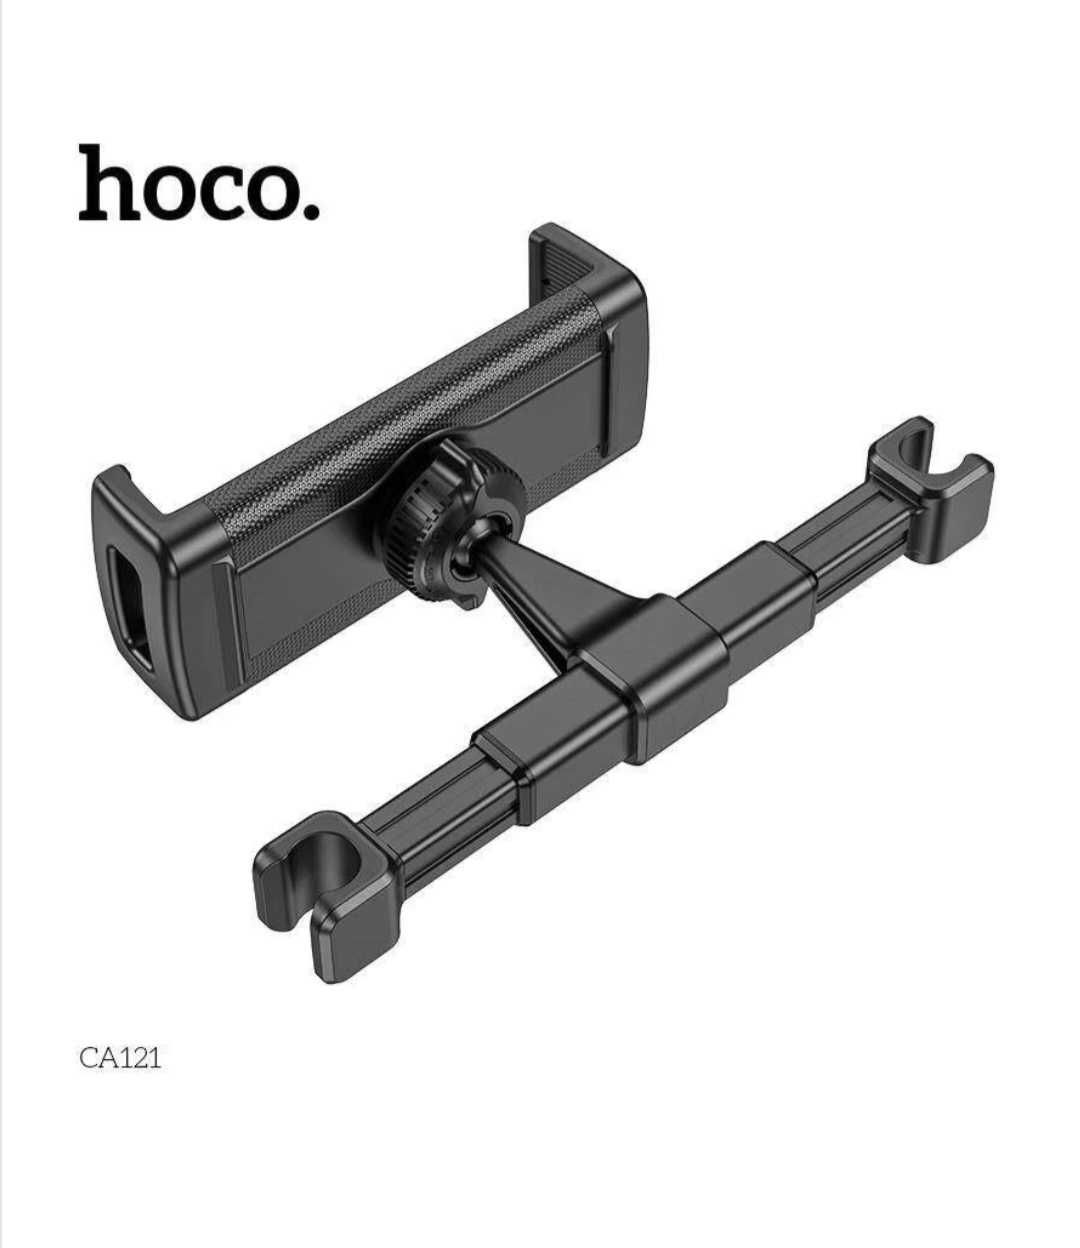 Suport auto tetiera pentru tableta - telefon - Hoco CA121